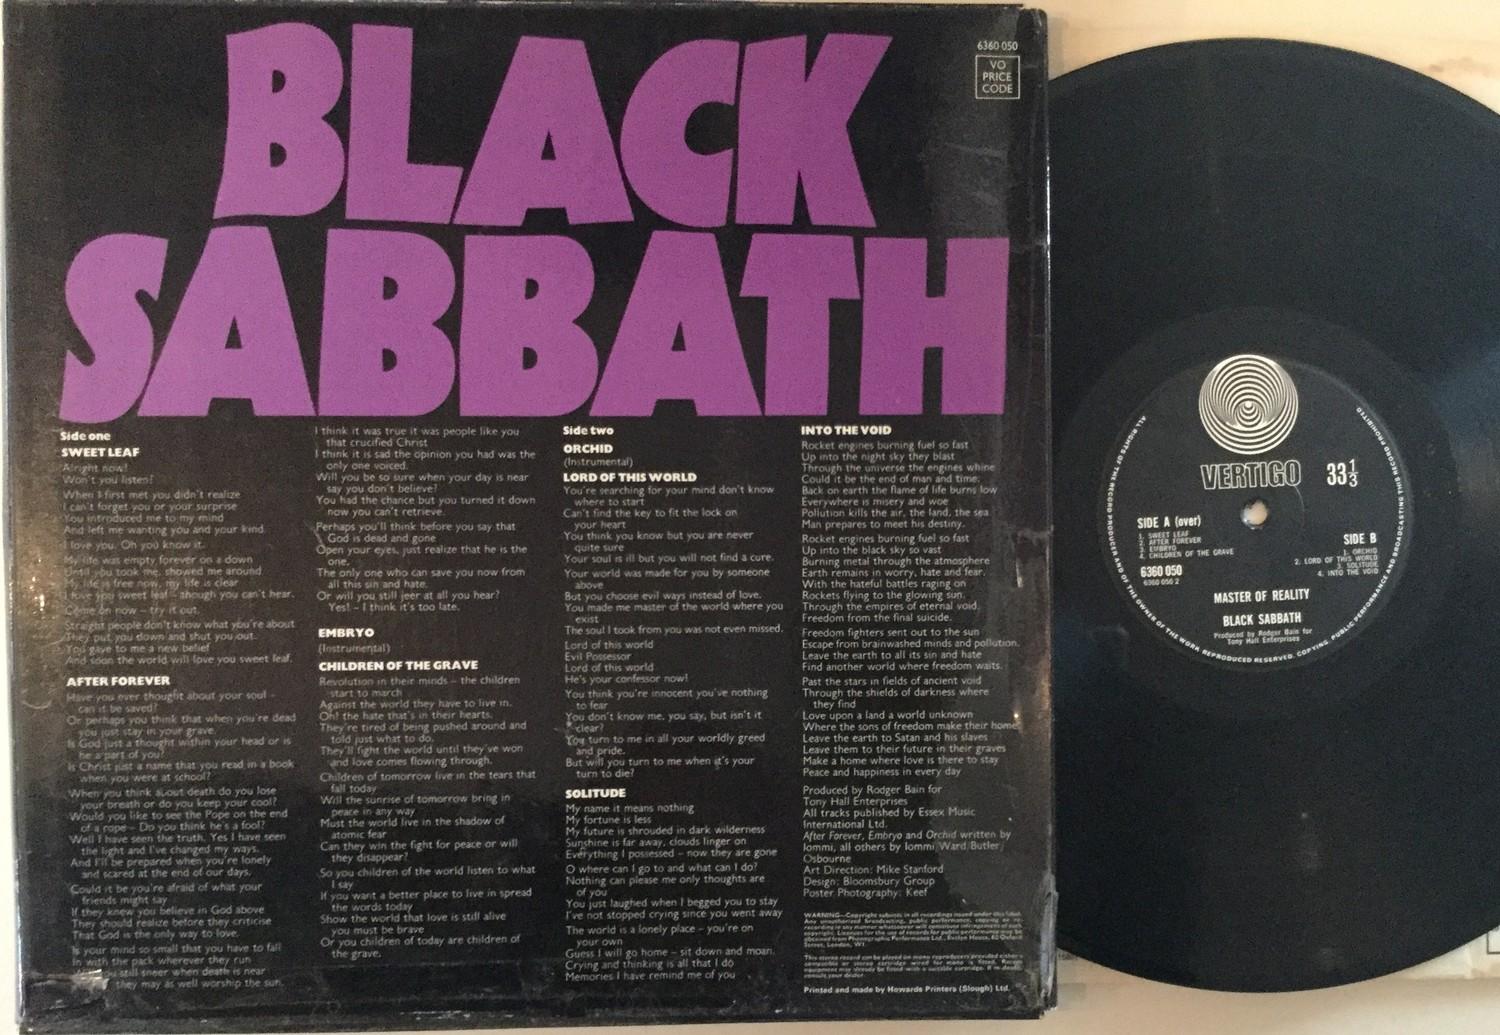 BLACK SABBATH 'MASTER OF REALITY' 33 RPM - LP. Vinyl Album on Vertigo Swirl 6360 050. Album / Box - Image 2 of 3